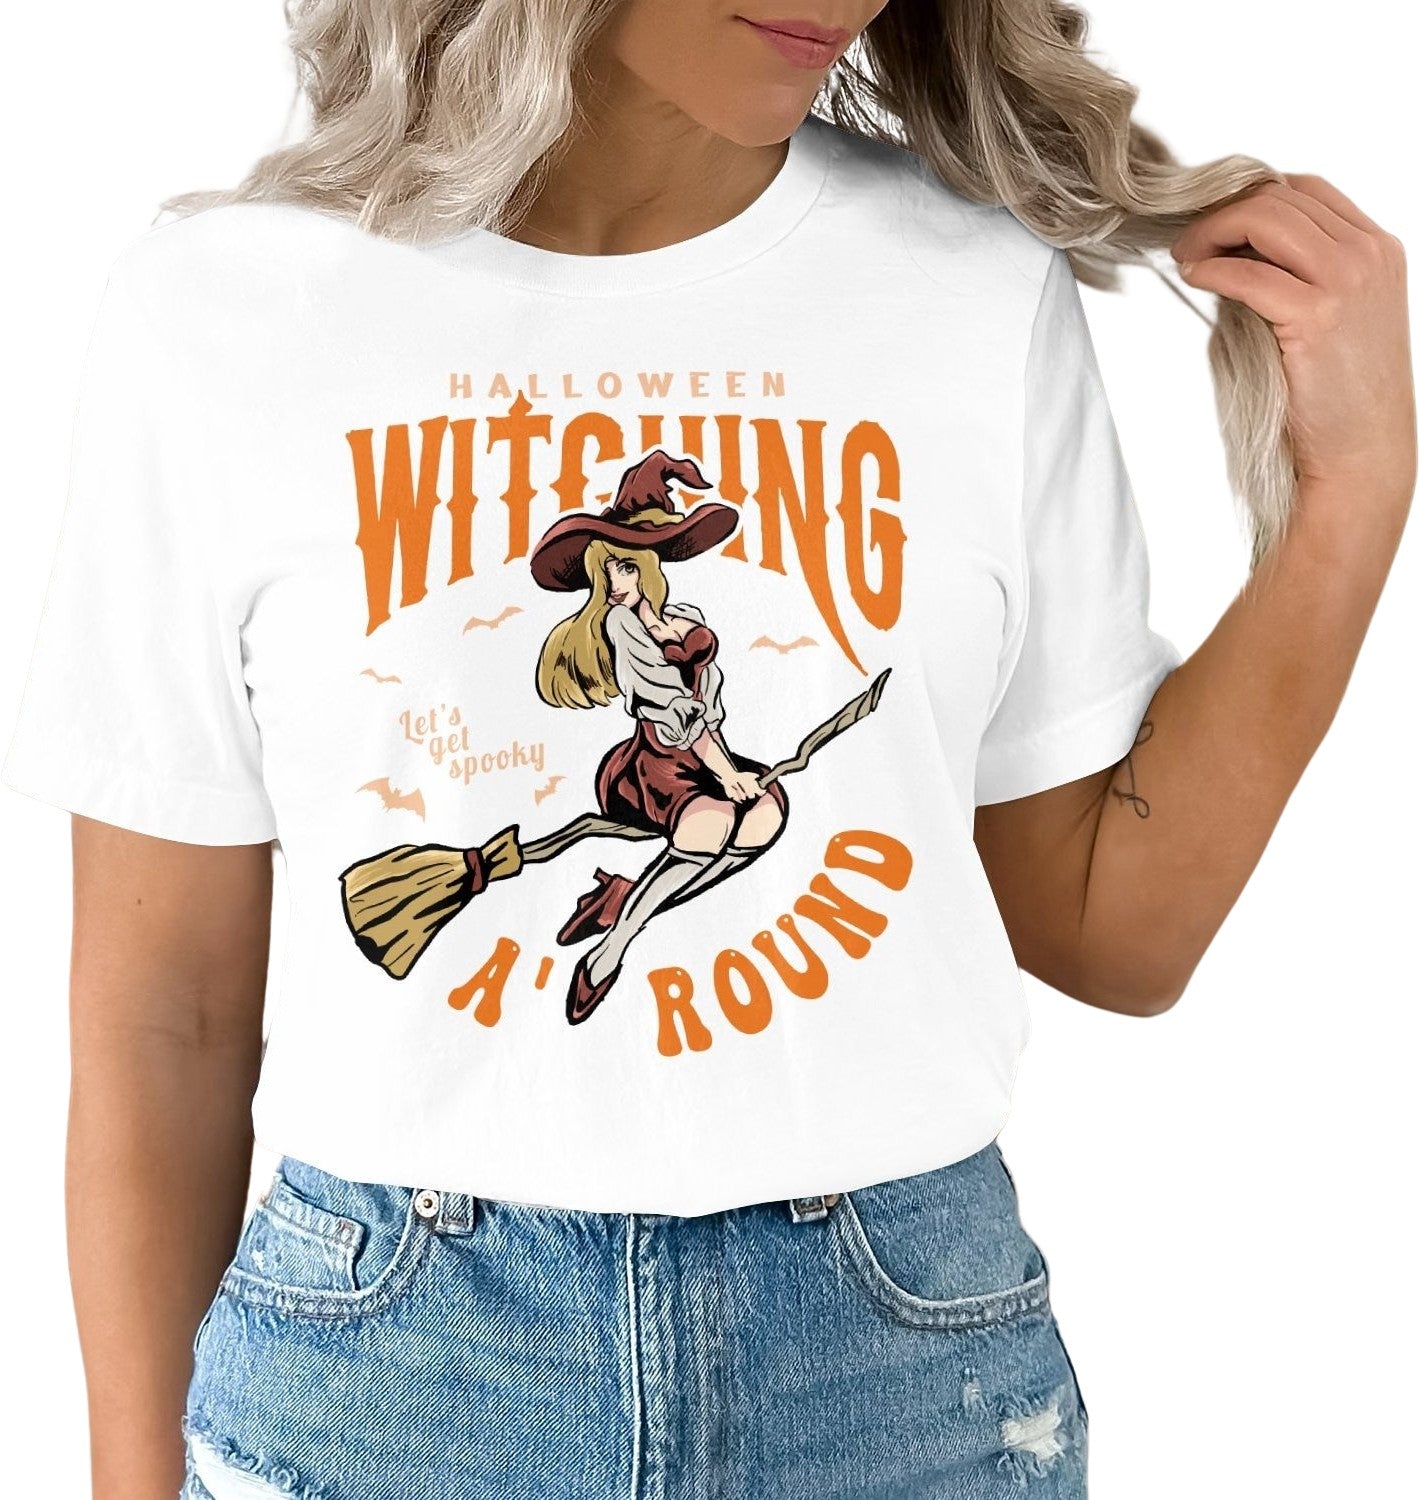 Witching Around T-Shirt, Halloween Top, Halloween Shirt, Funny Halloween Shirt, Women's Halloween Shirt, Witch Shirt, Pumpkin Tee